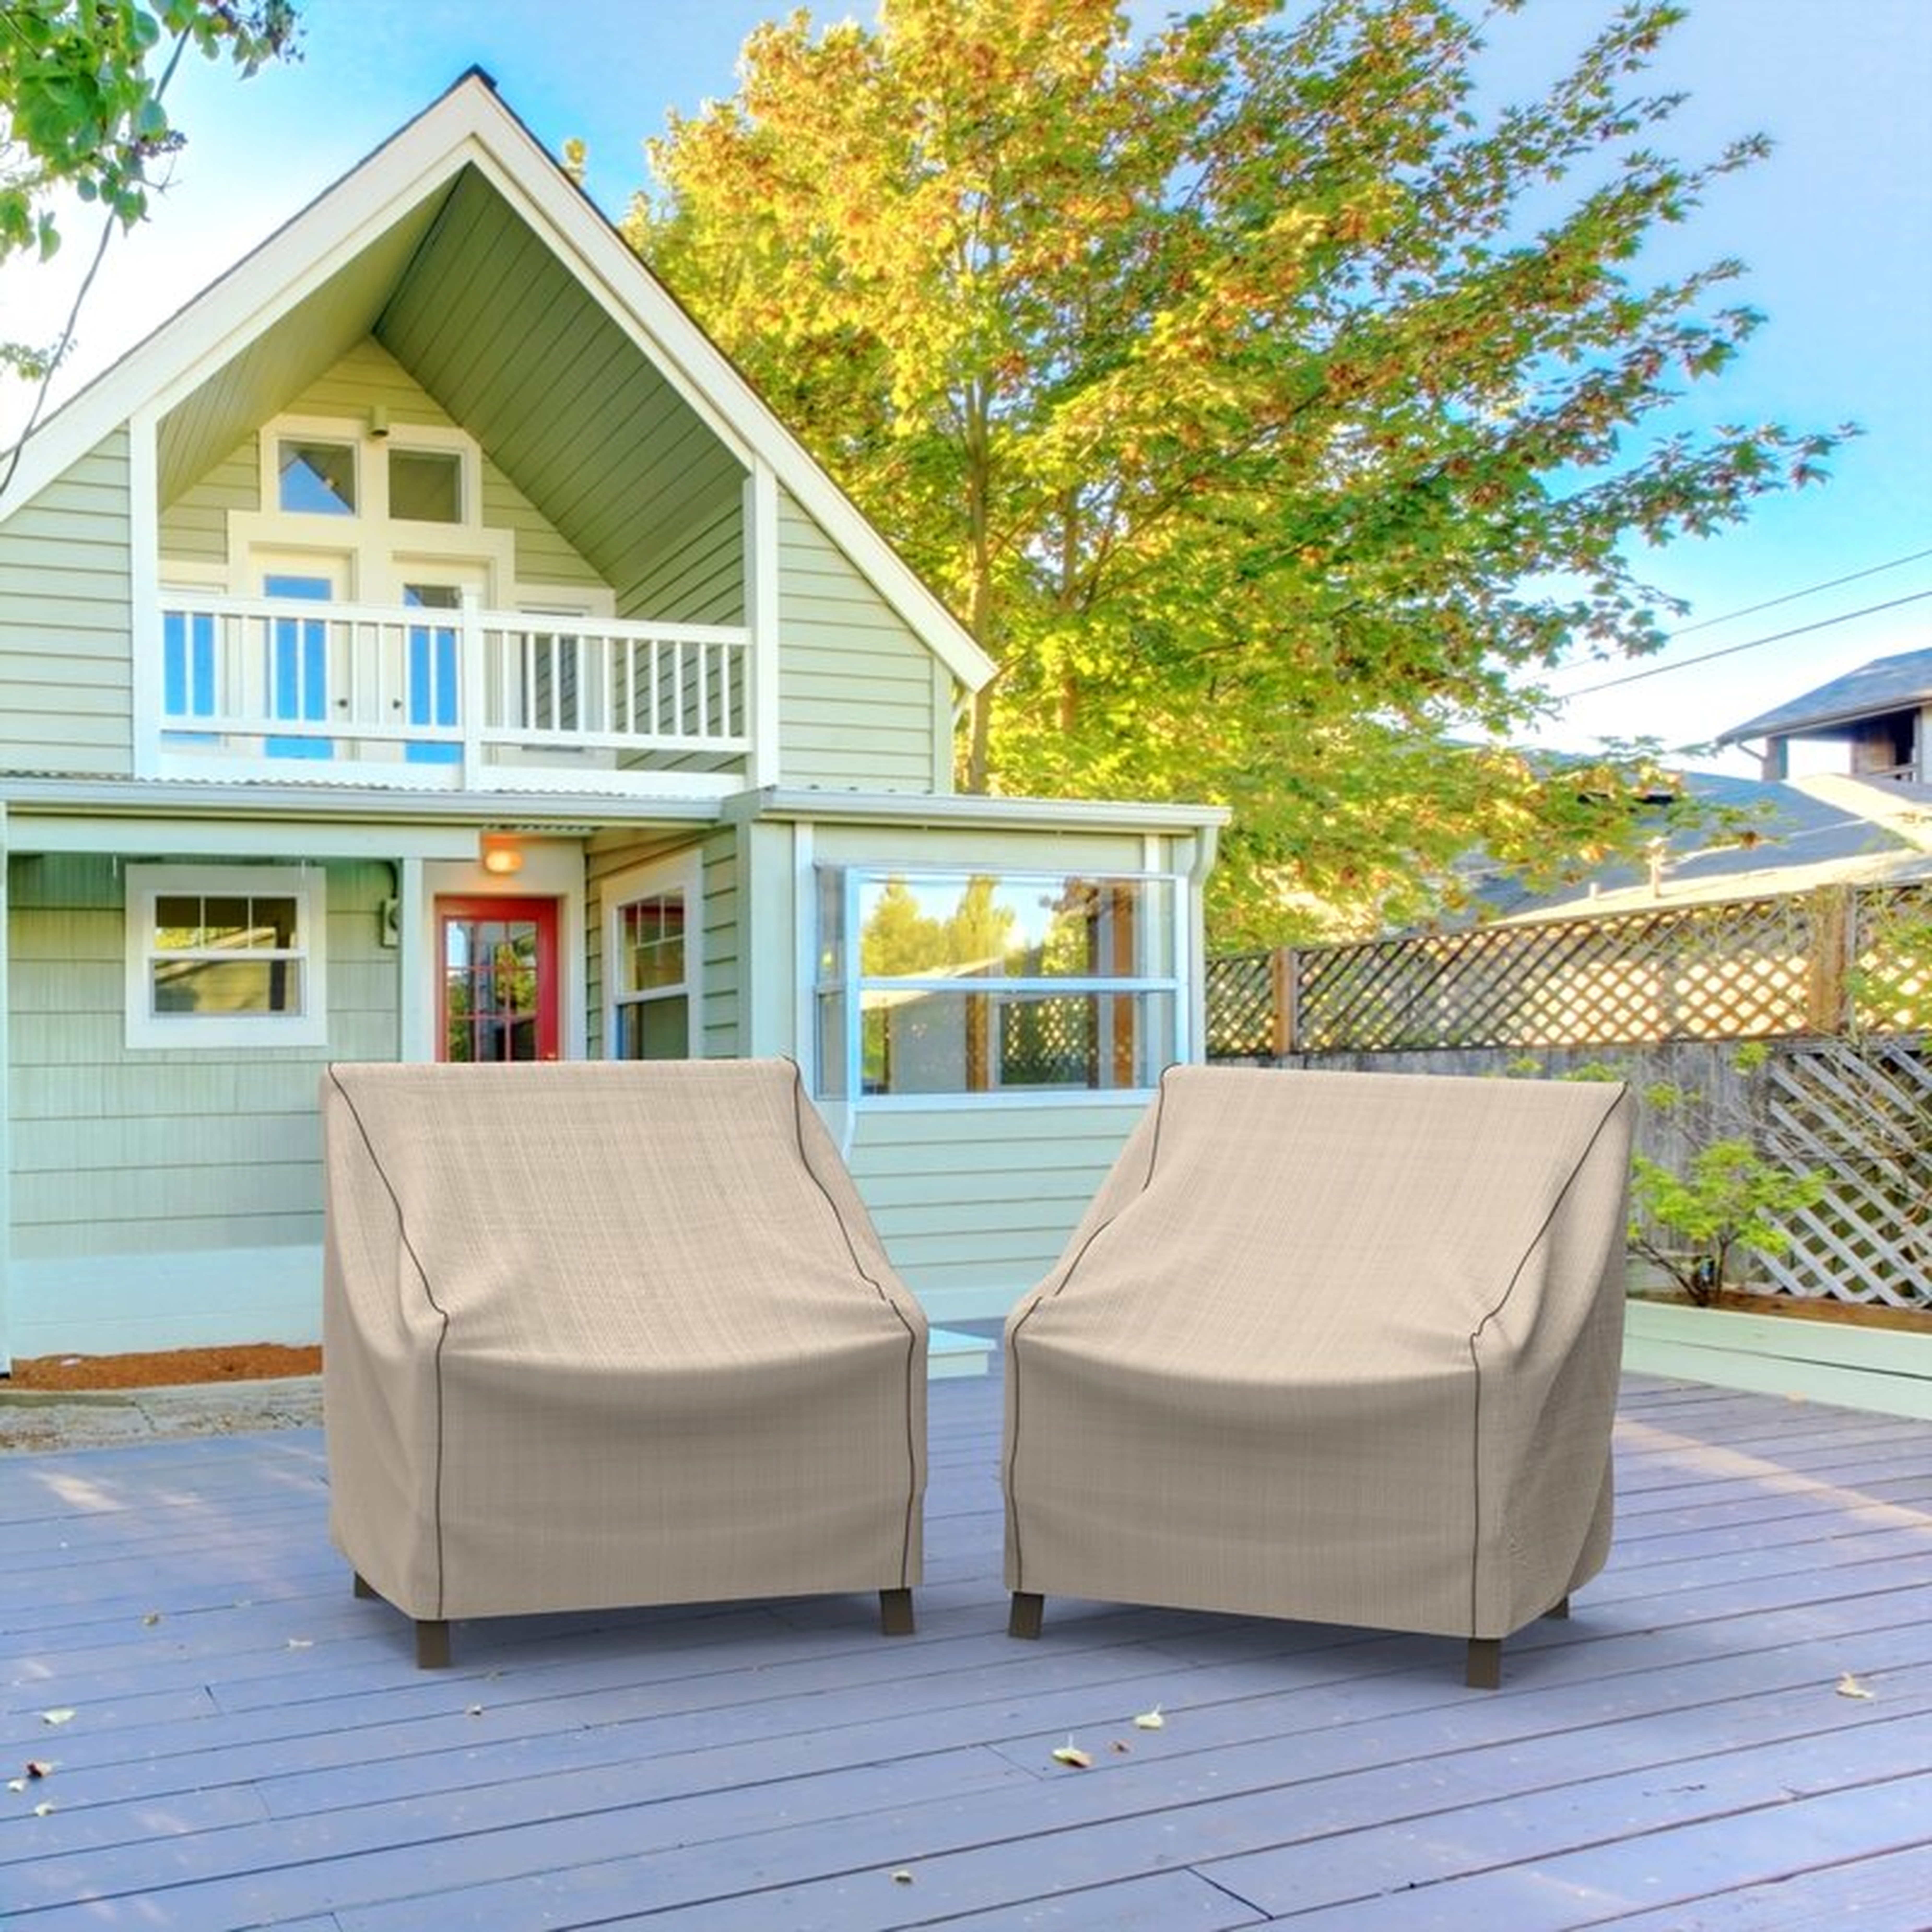 English Garden Outdoor Waterproof Patio Chair Cover with 2 Year Warranty (Set of 2) - Wayfair